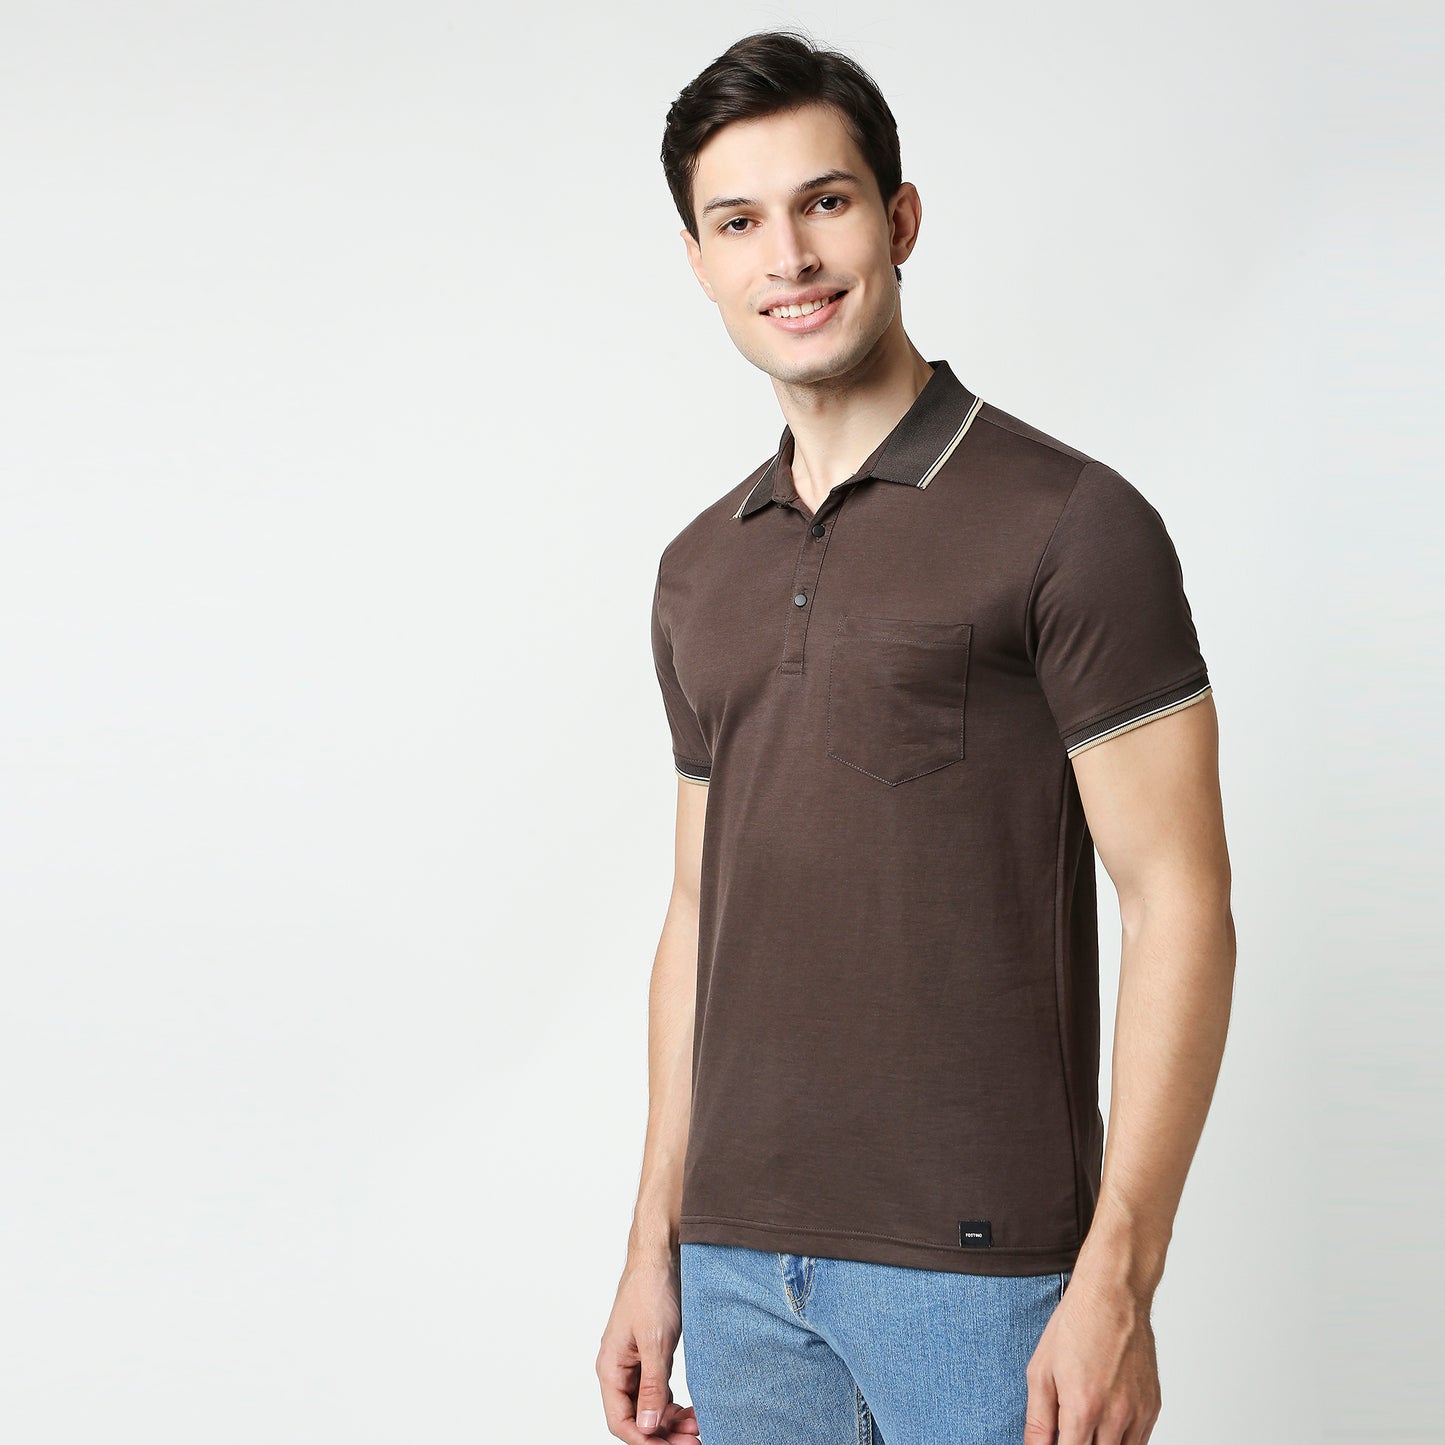 Fostino Mission Slim Fit Polo T-shirt + 3 colors - Fostino - T-Shirts